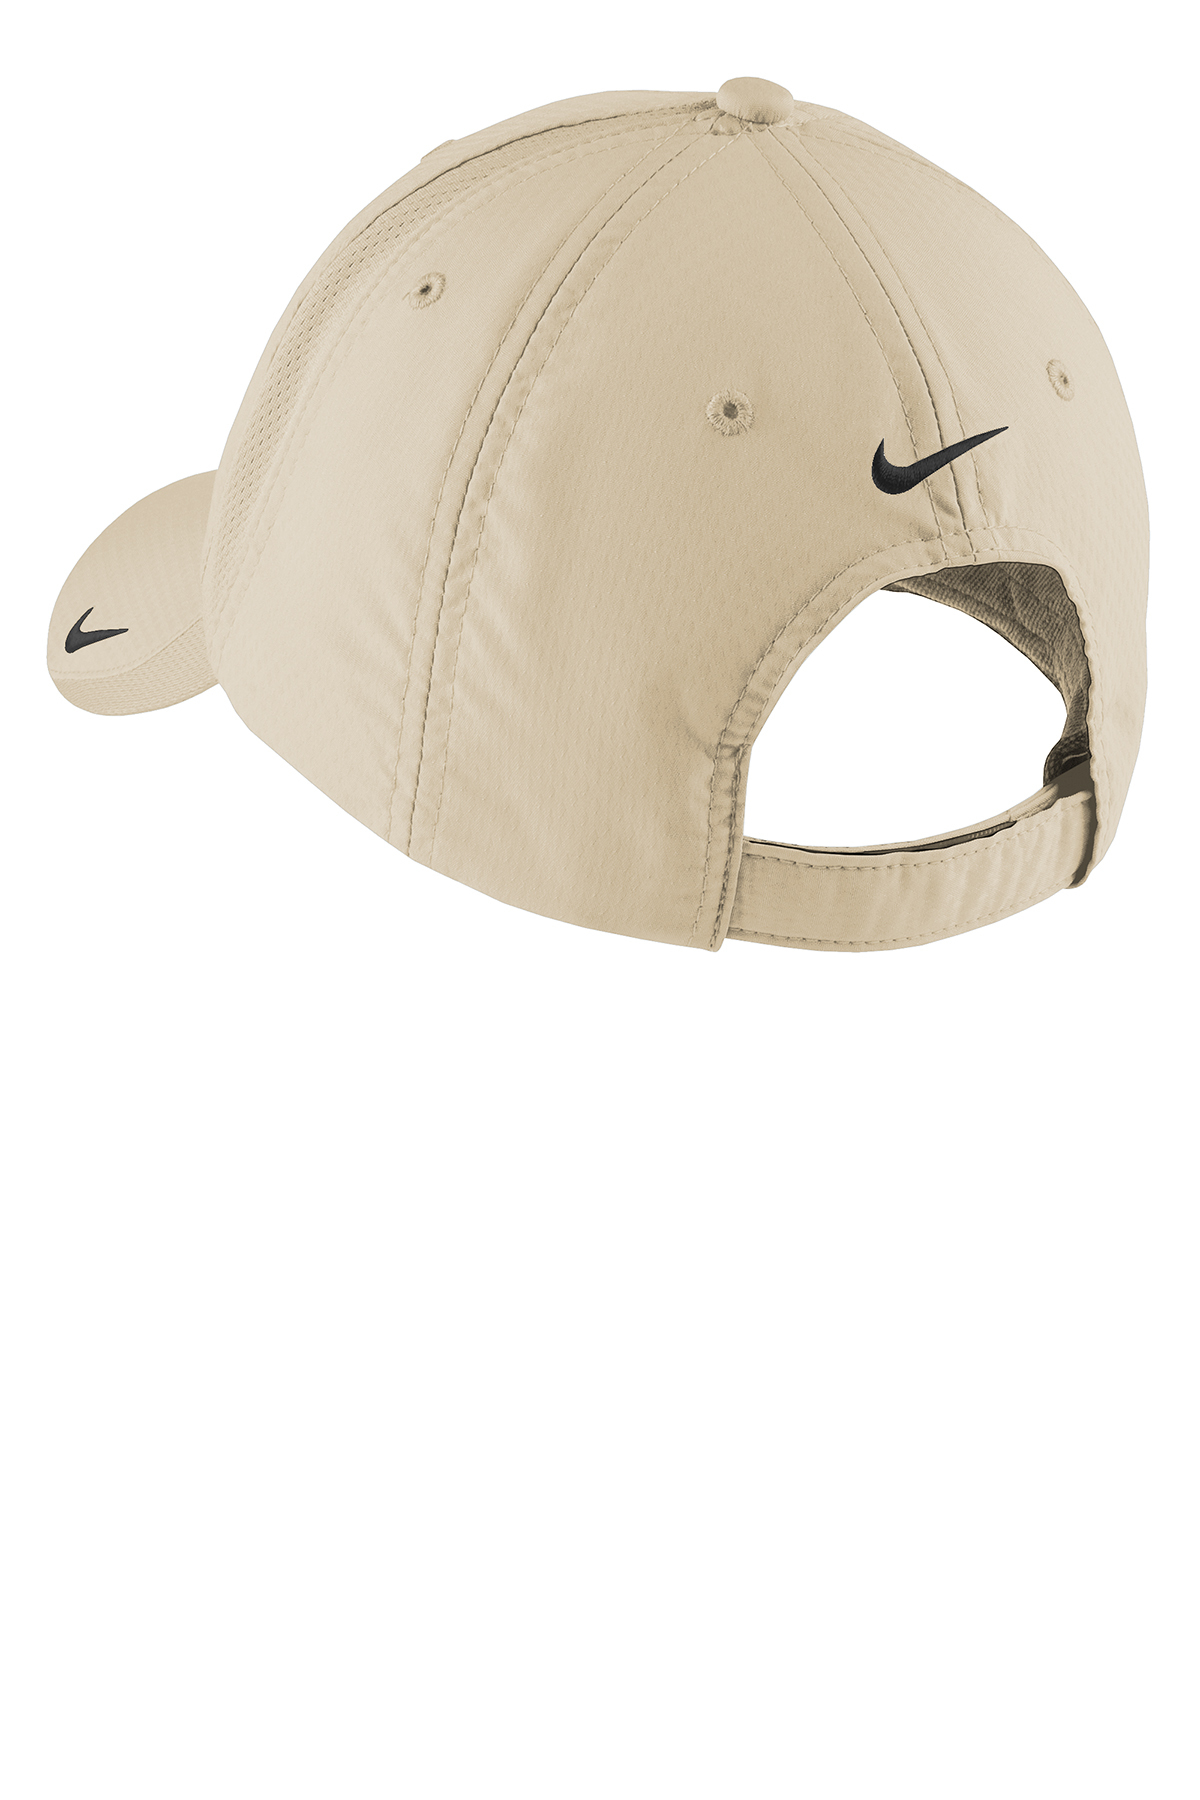 Guerrero imagen Literatura Nike Sphere Dry Cap | Product | SanMar